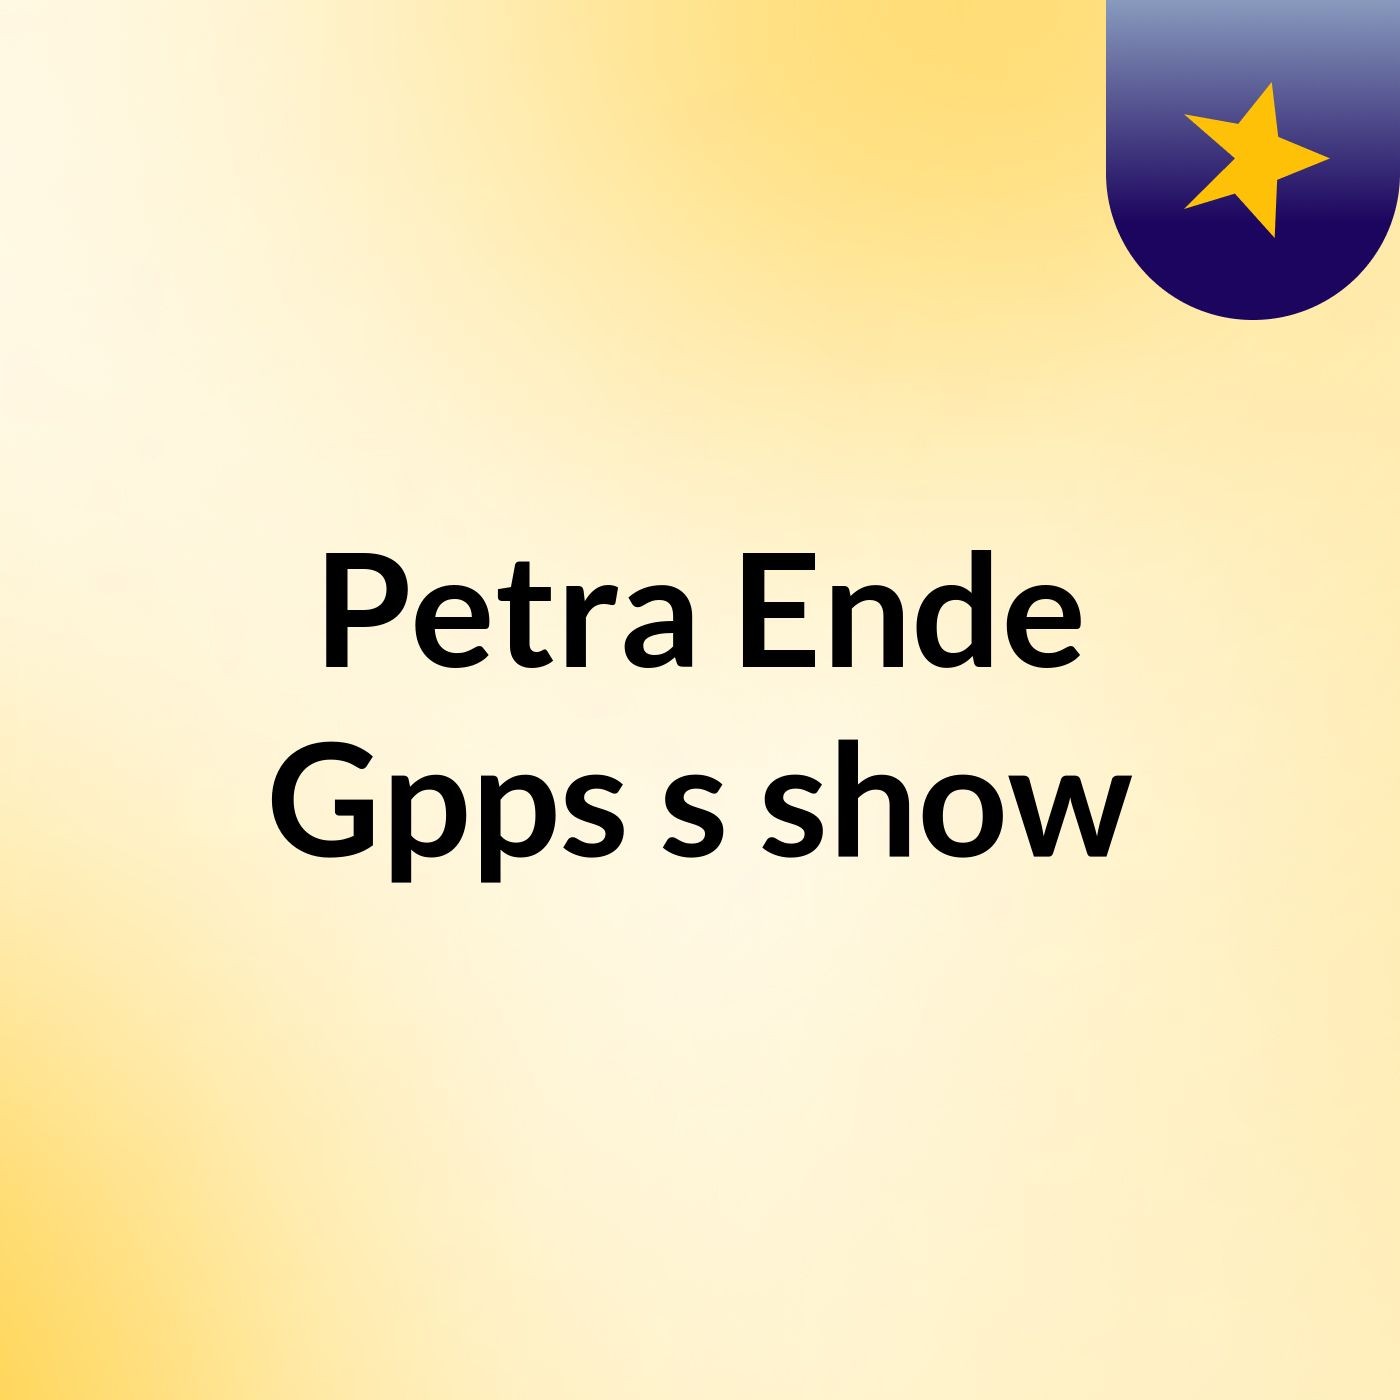 Episode 4 - Petra Ende Gpps's show